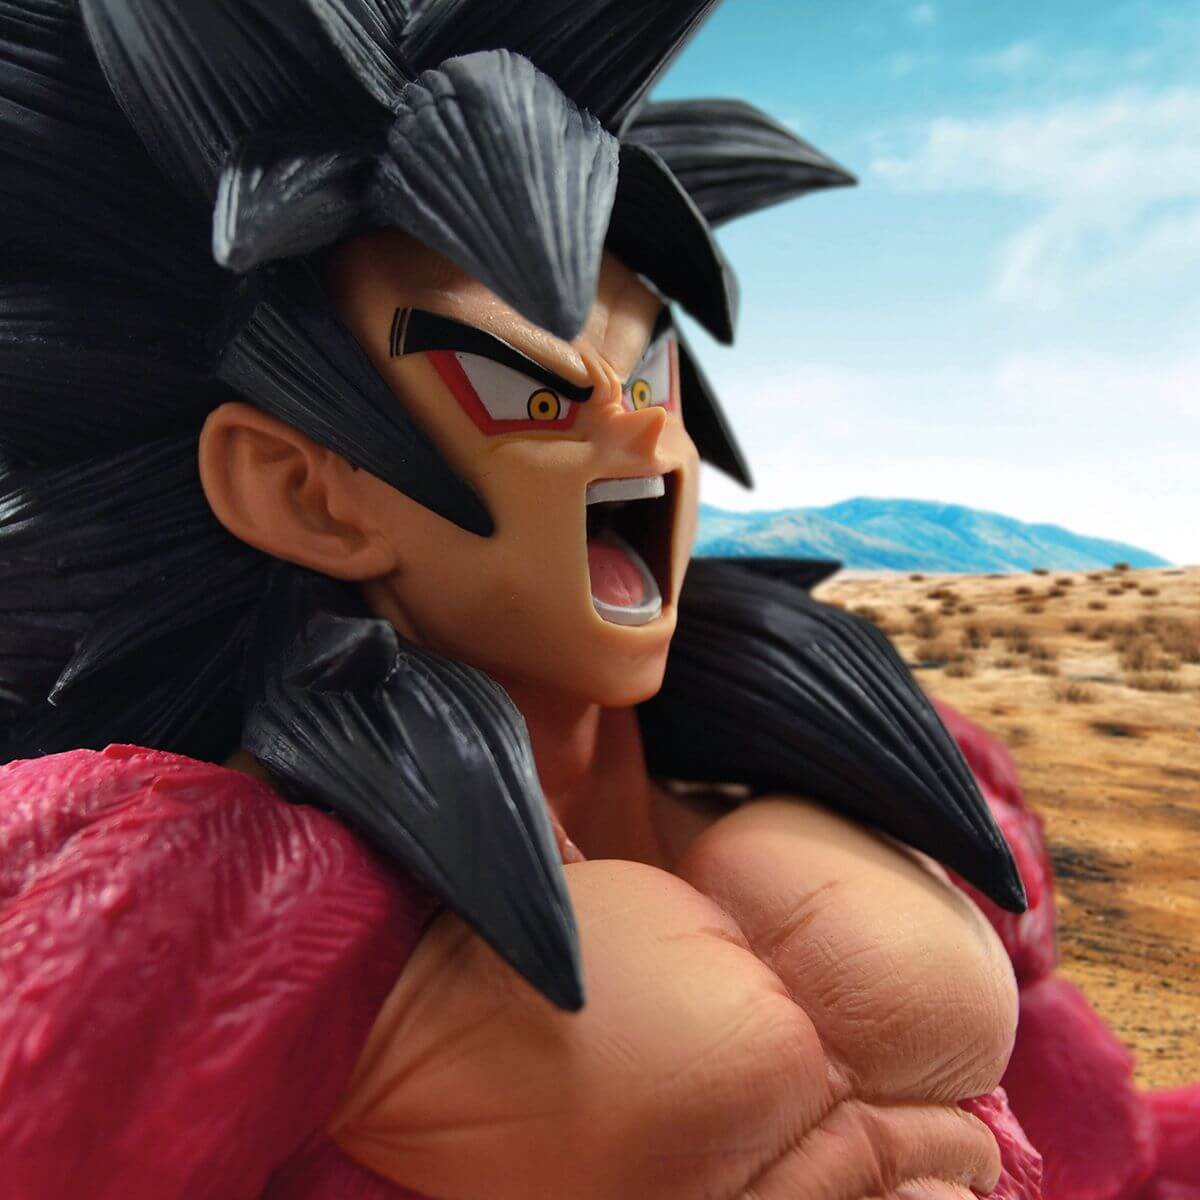 Son Goku Super Saiyan 4 SH Figuarts Dragon Ball GT